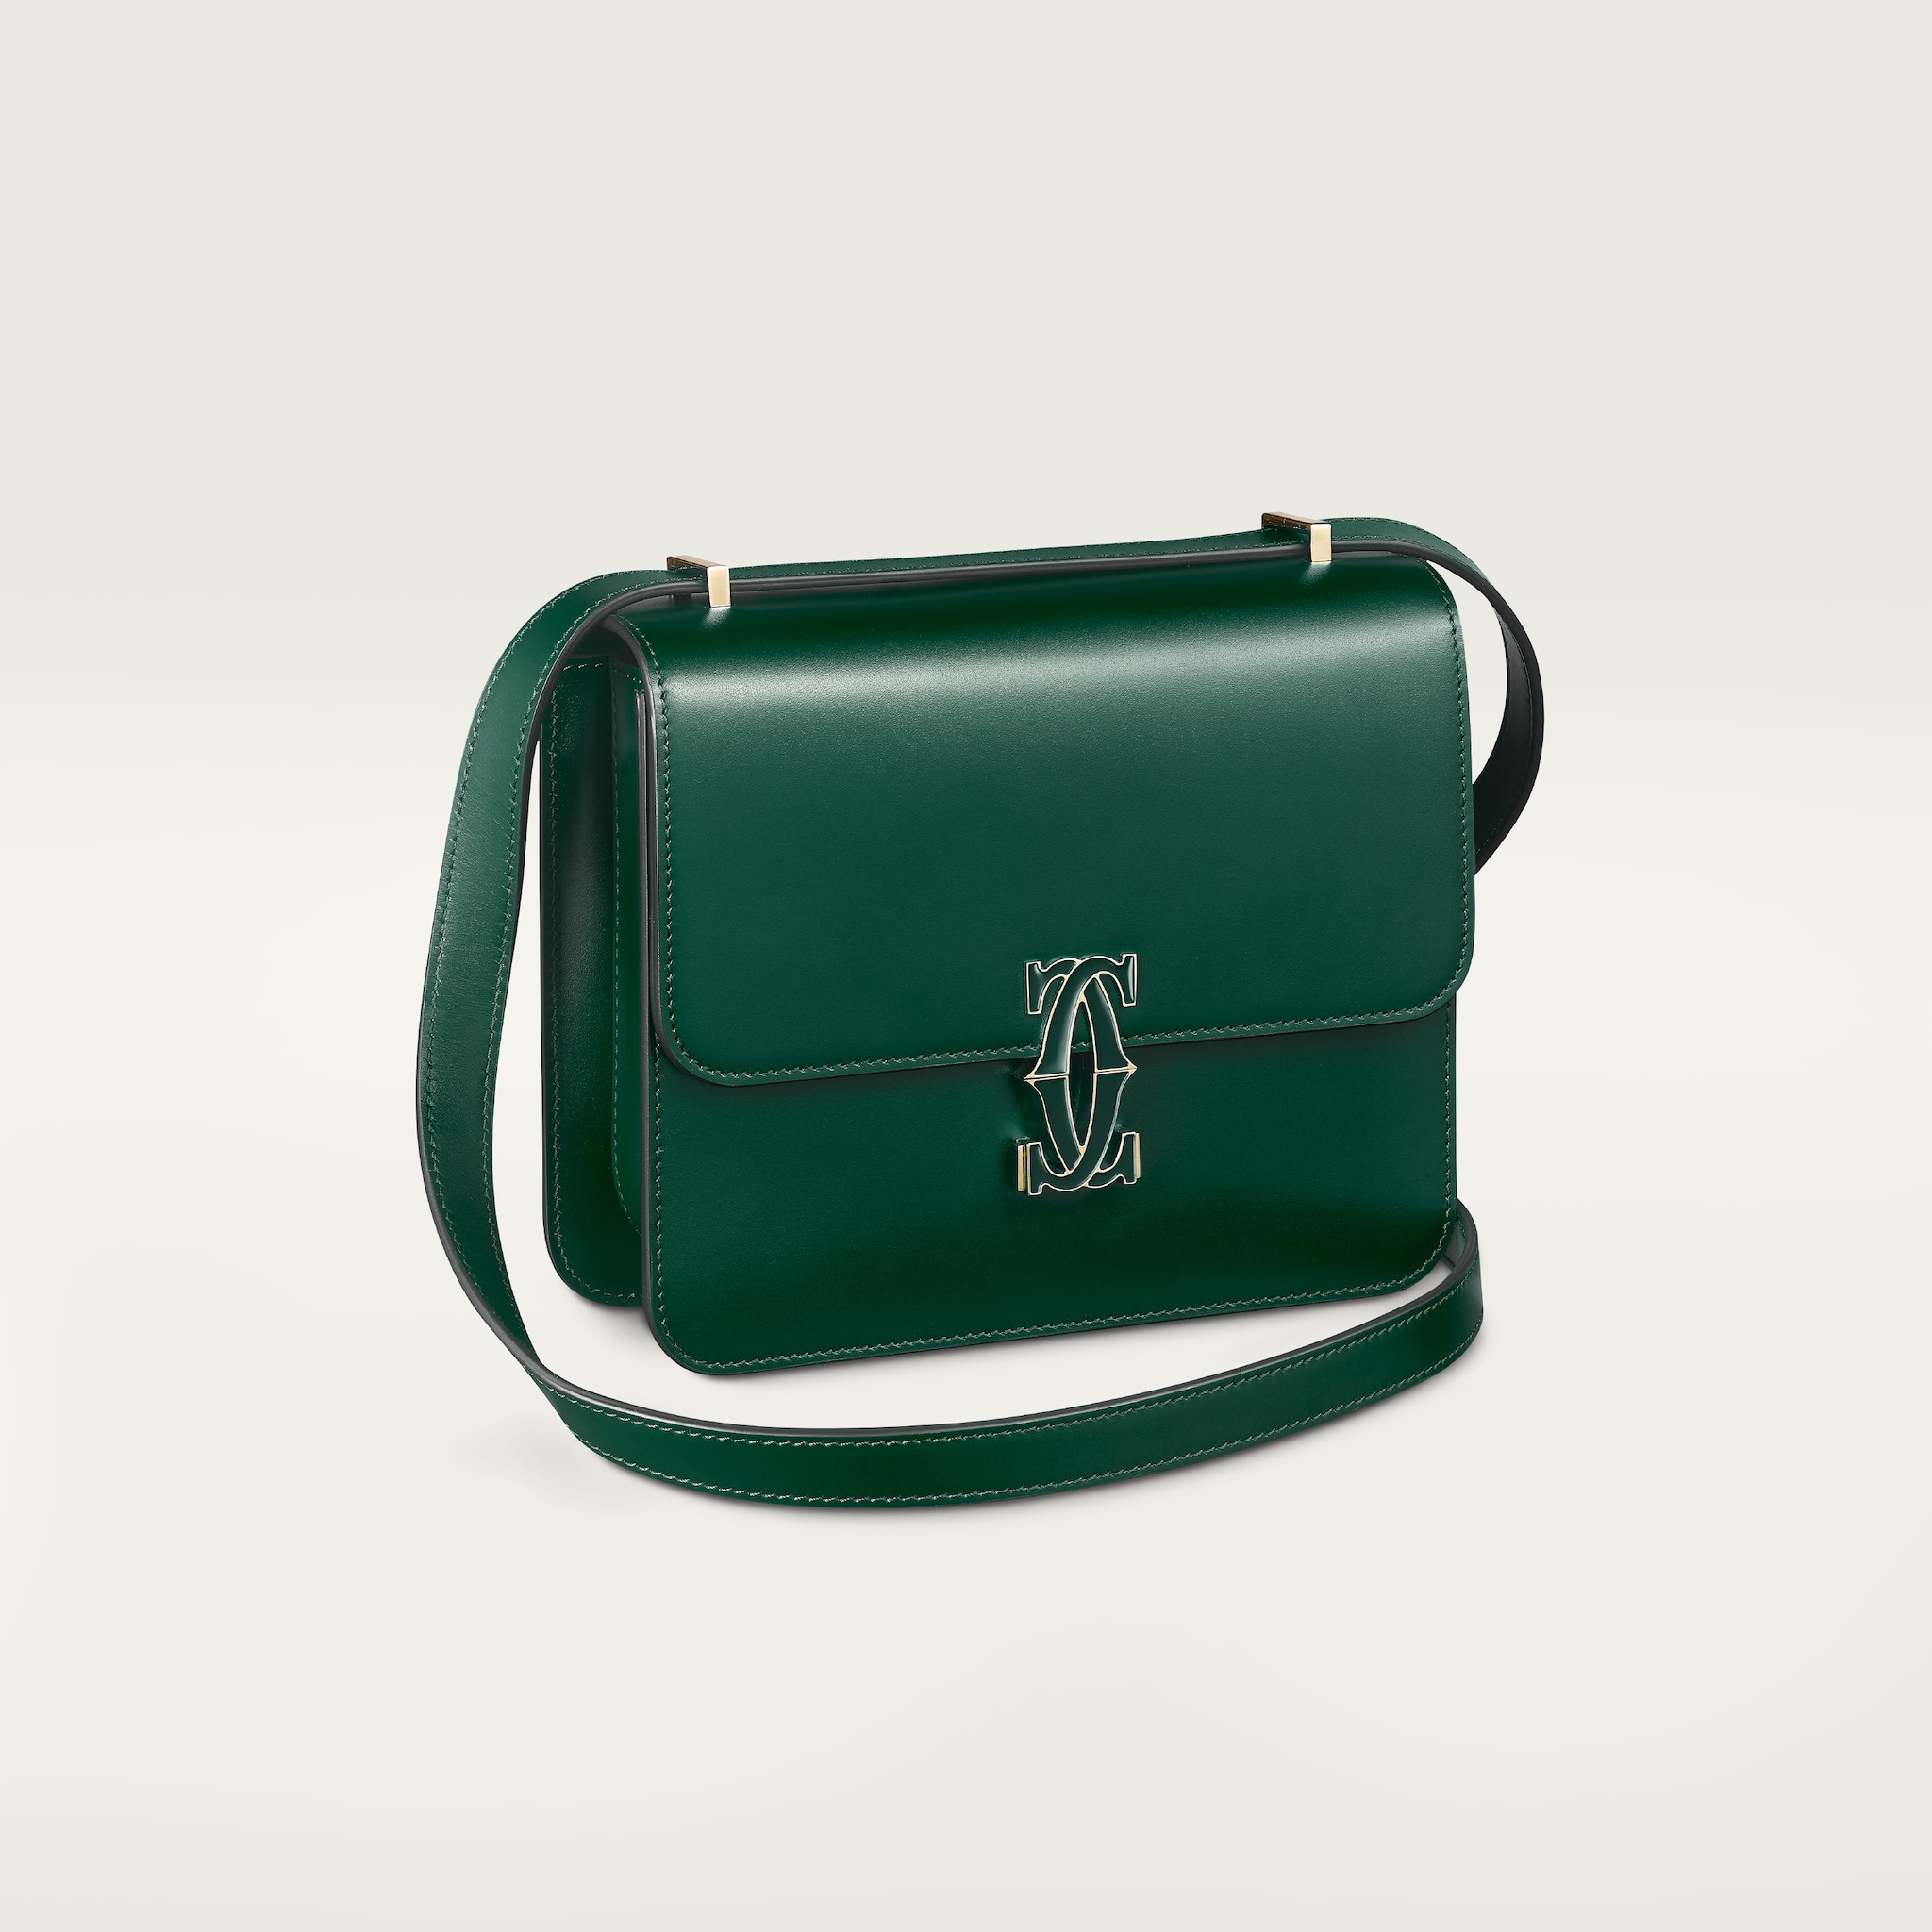 Mini shoulder bag, C de CartierDark green calfskin, gold and dark green enamel finish